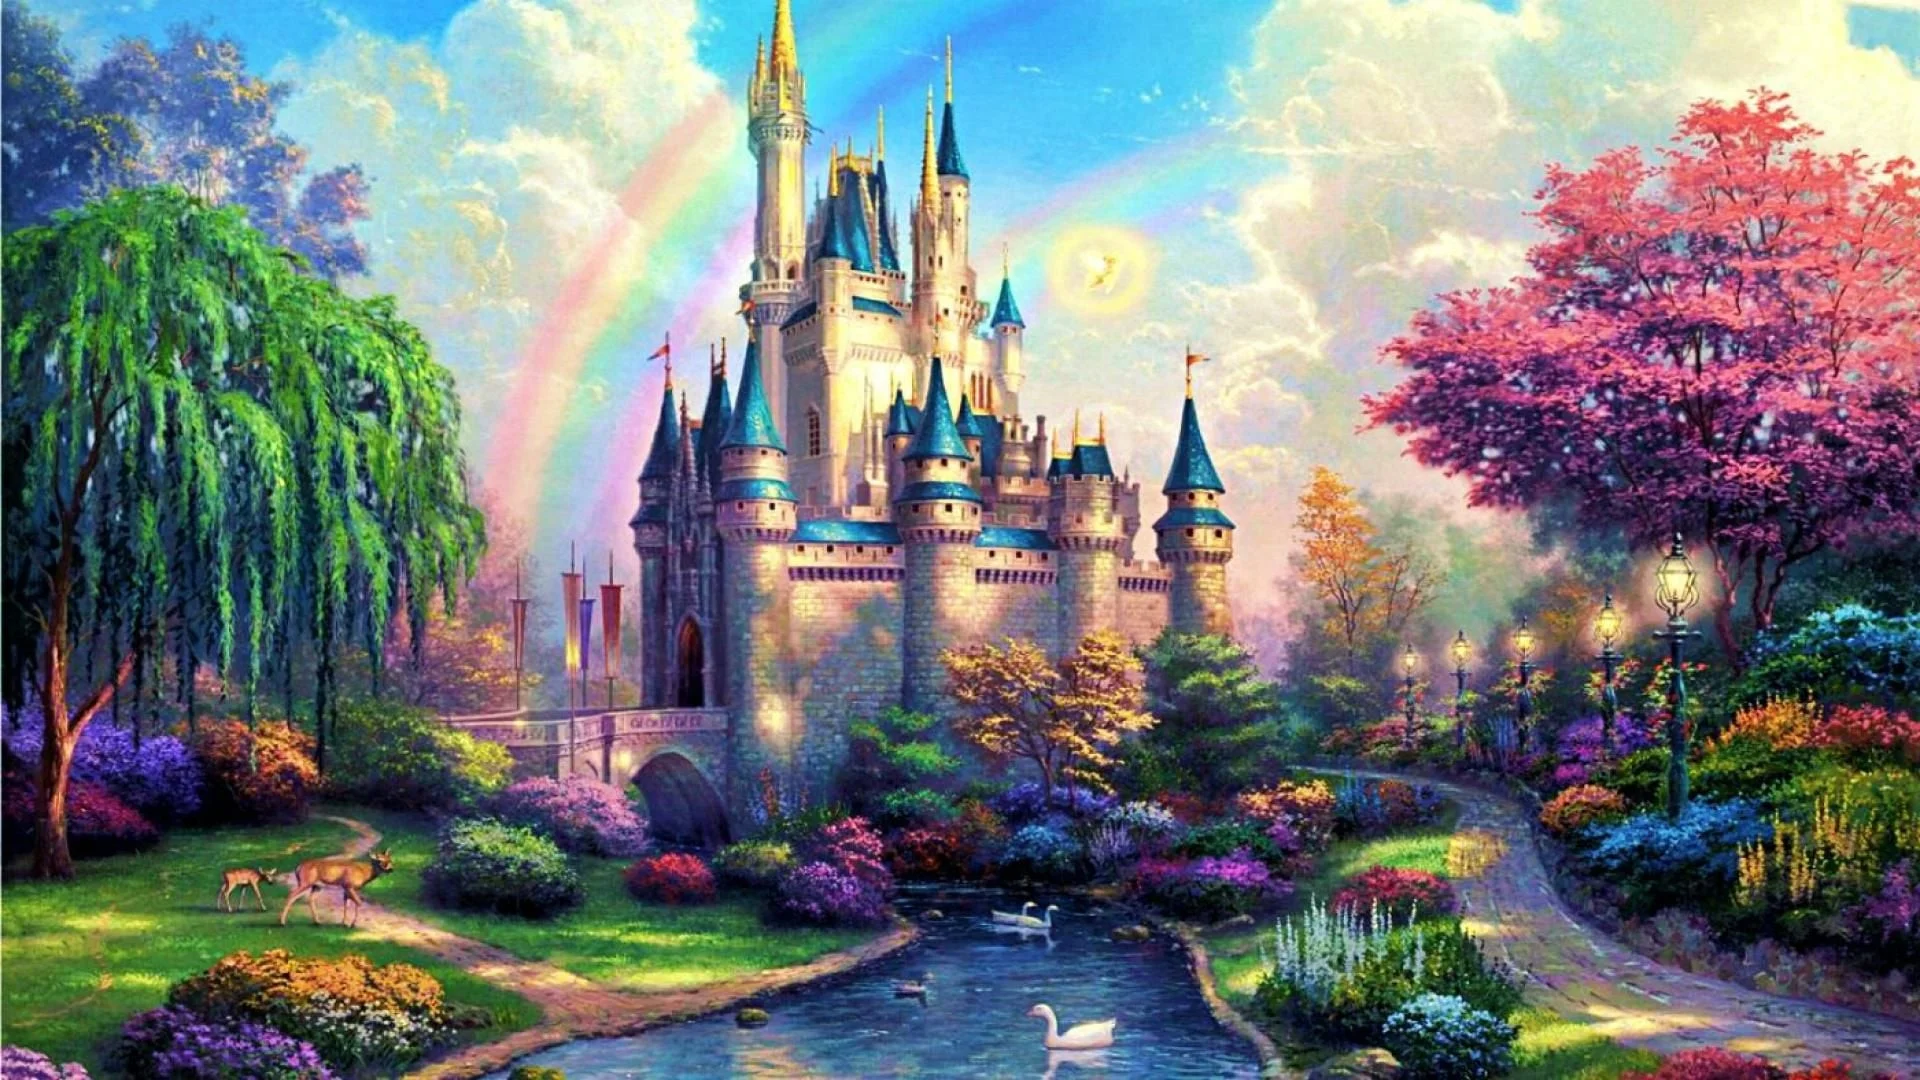 Disney castle wallpaper desktop background